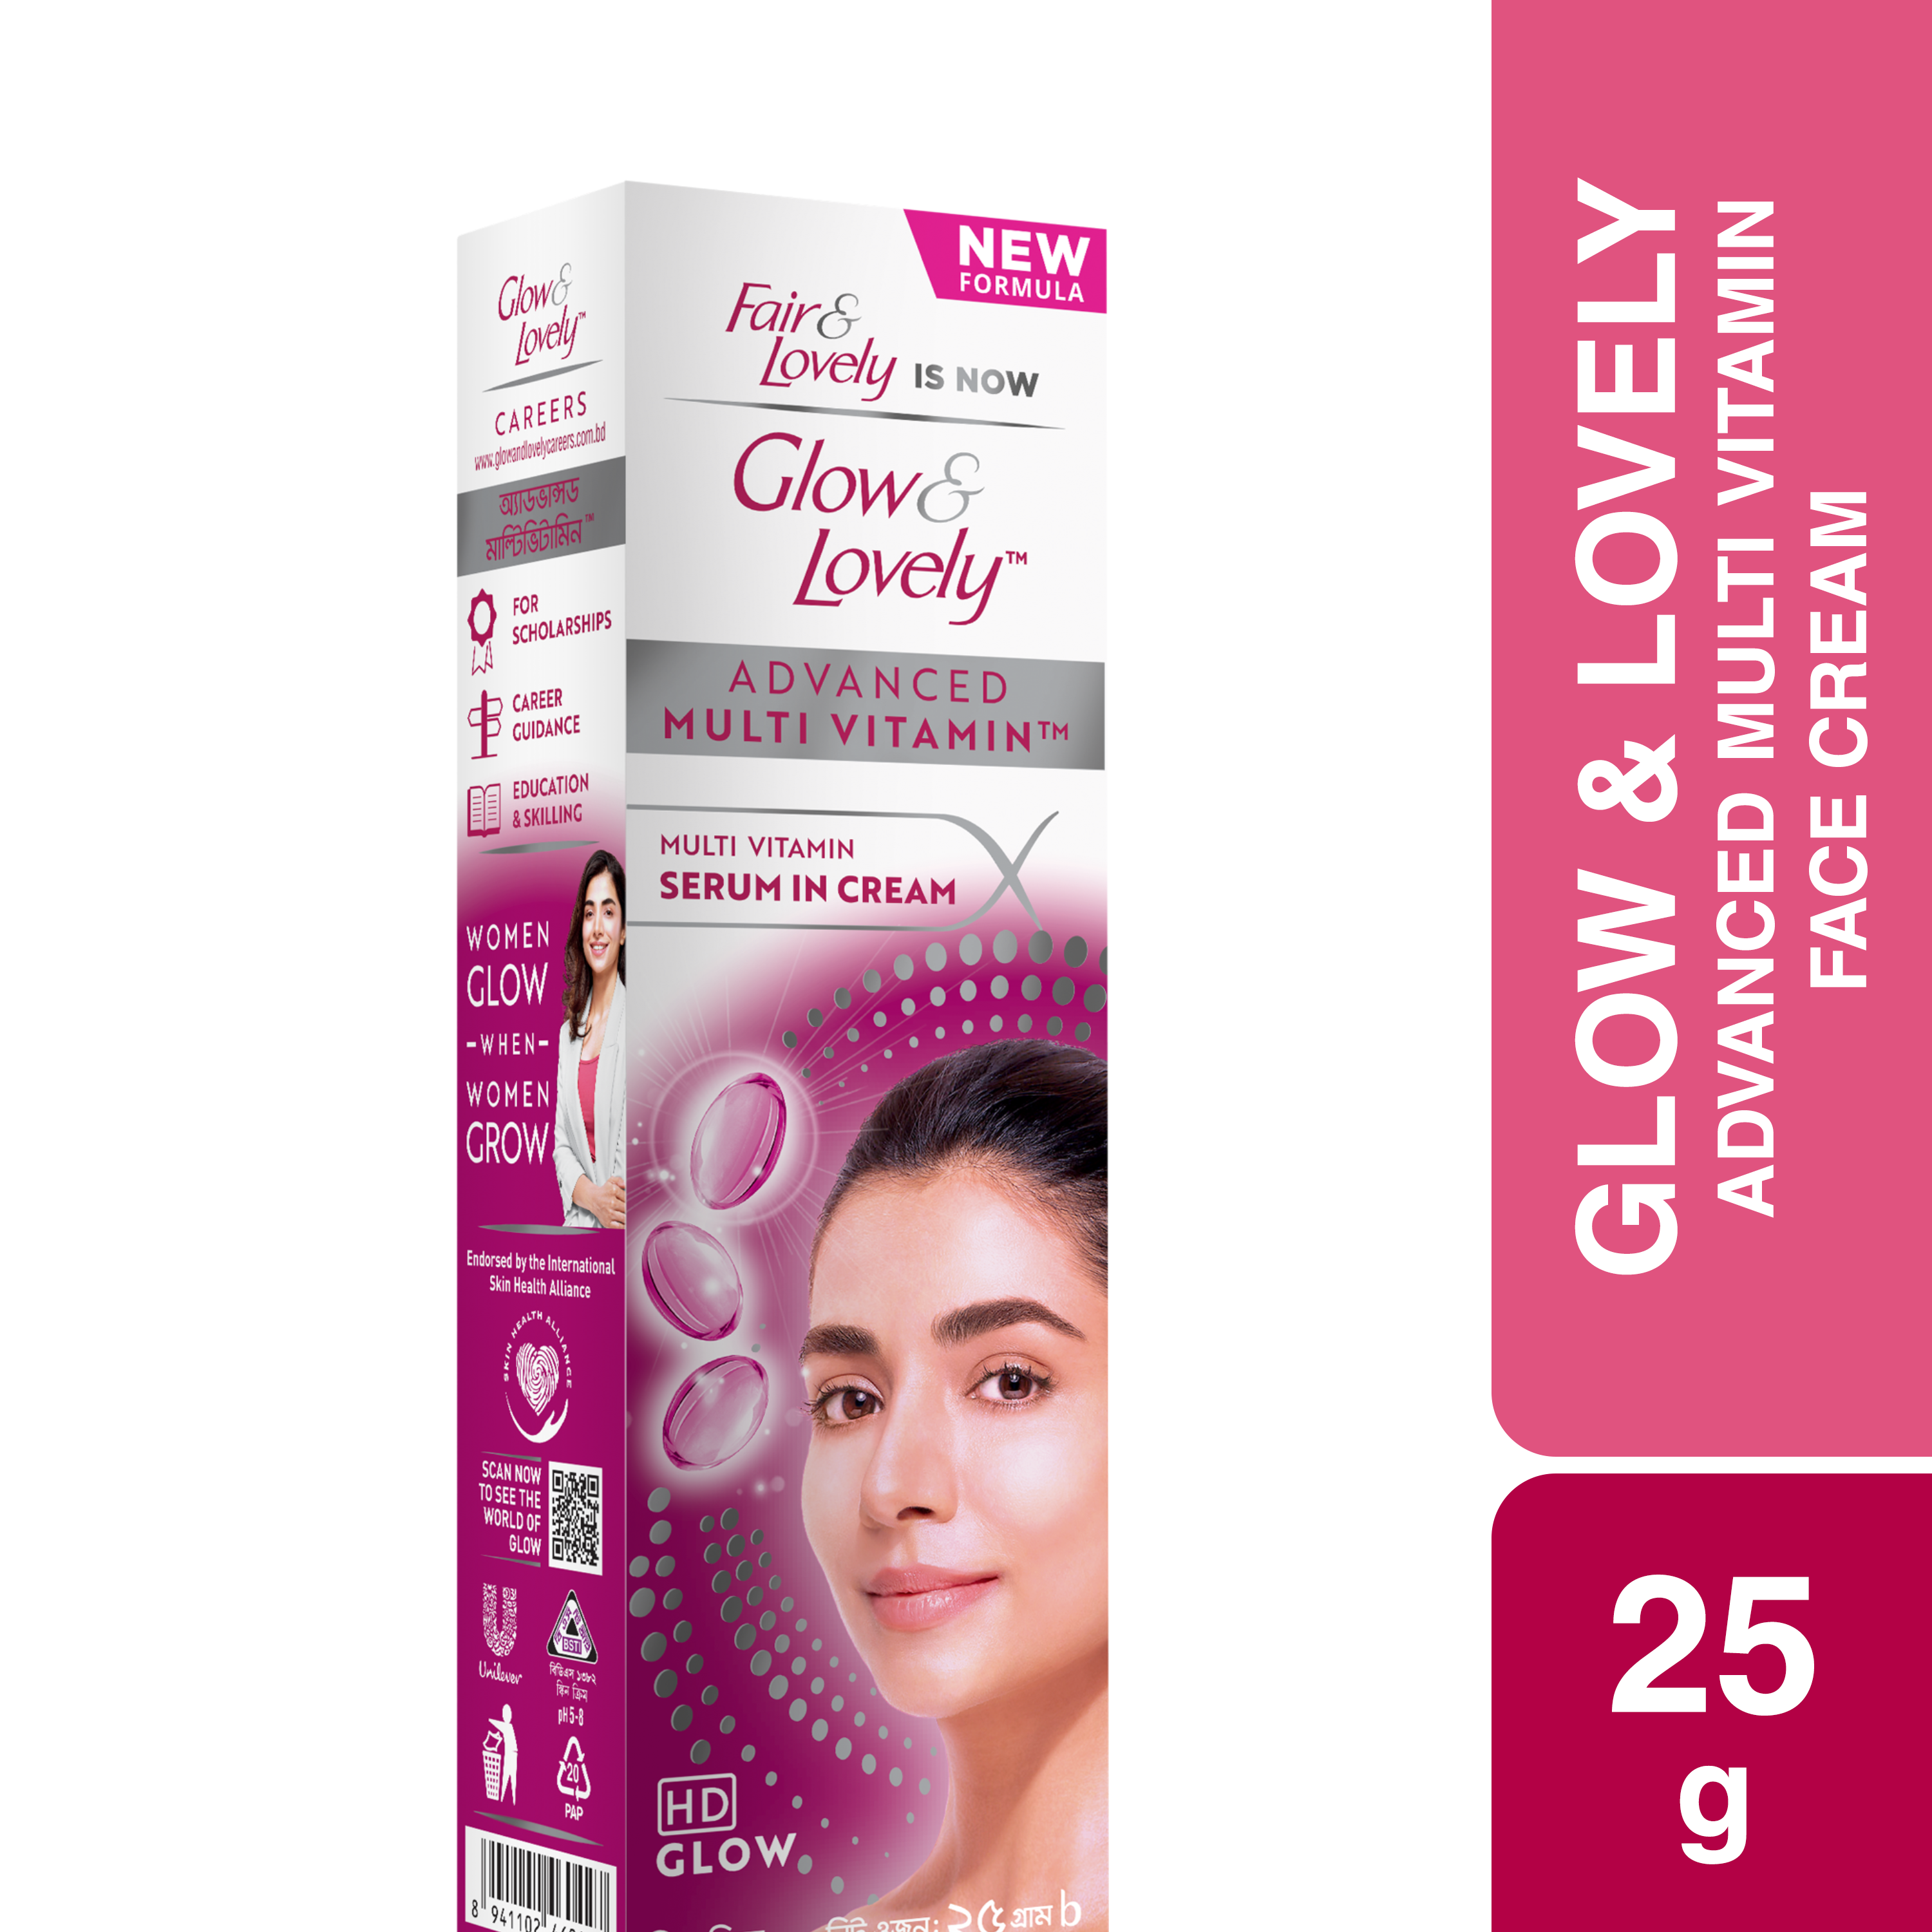 Glow &amp; Lovely Face Cream Advanced Multivitamin